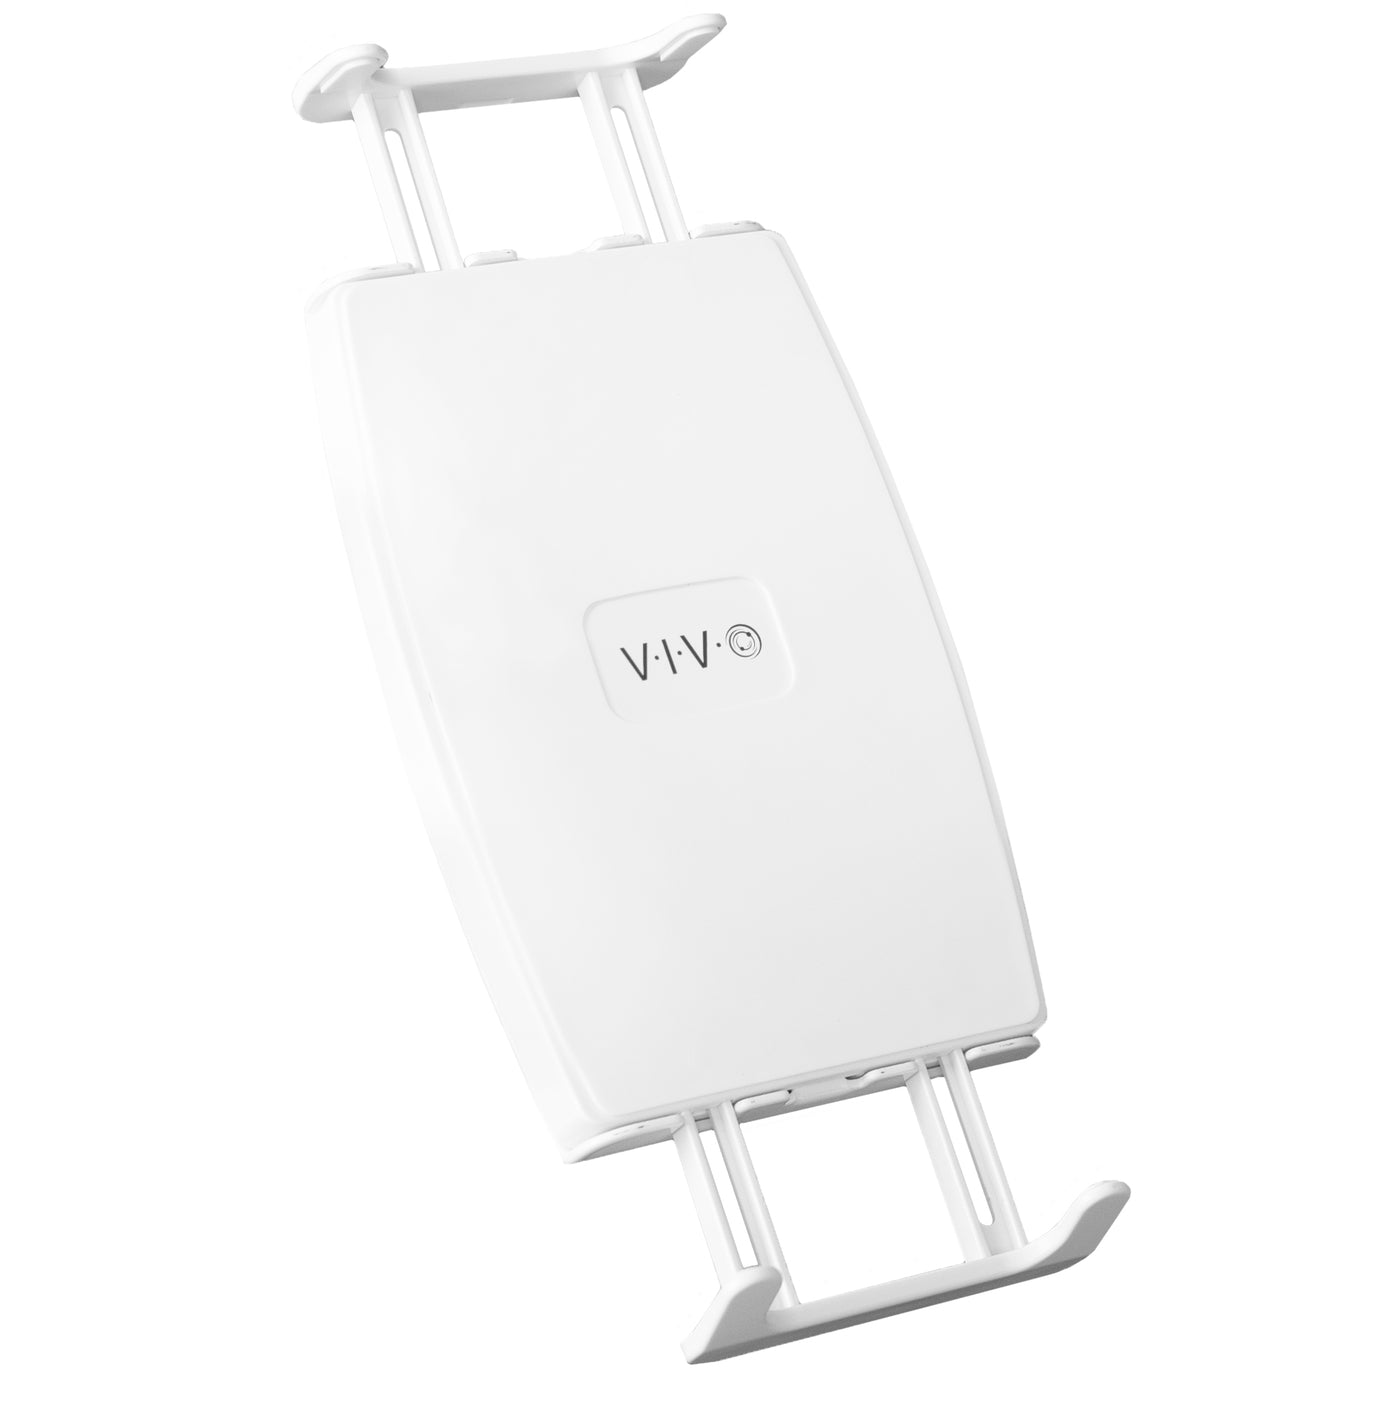 Universal VESA Holder for Tablets, 2-in-1 Laptops, Portable Monitors